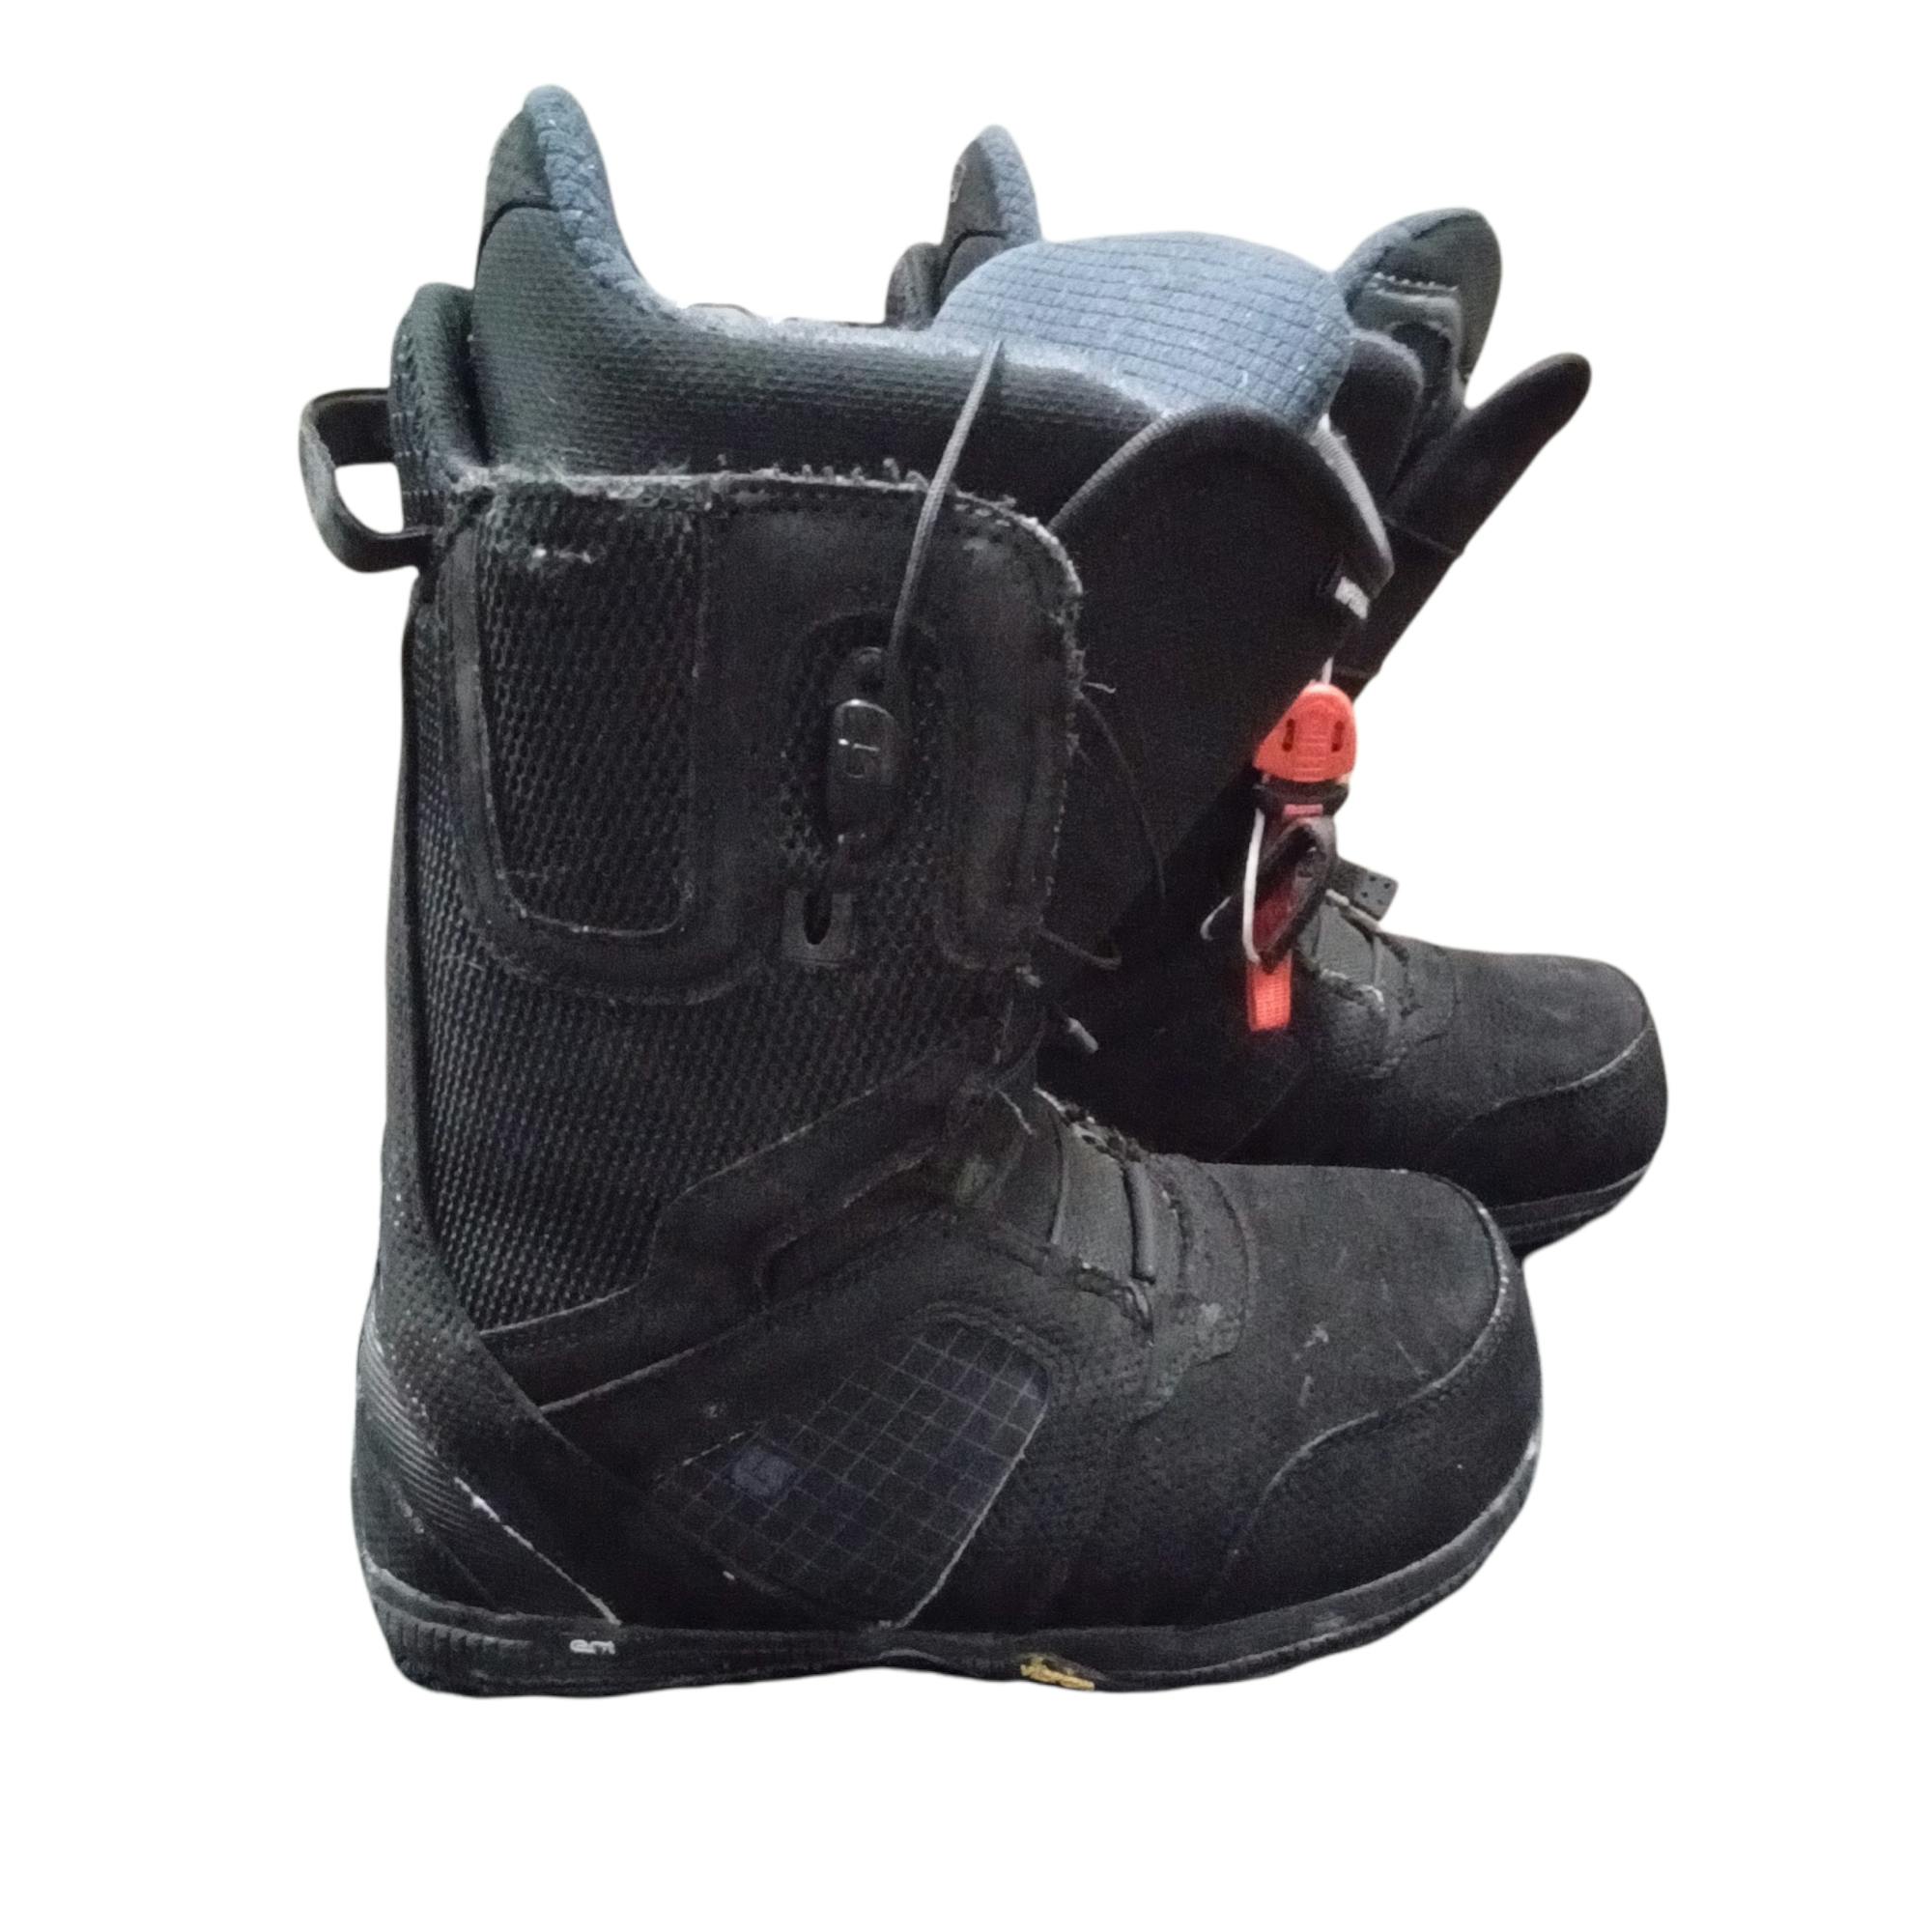 Men's Burton Imperial Snowboard Boot - ブーツ(男性用)